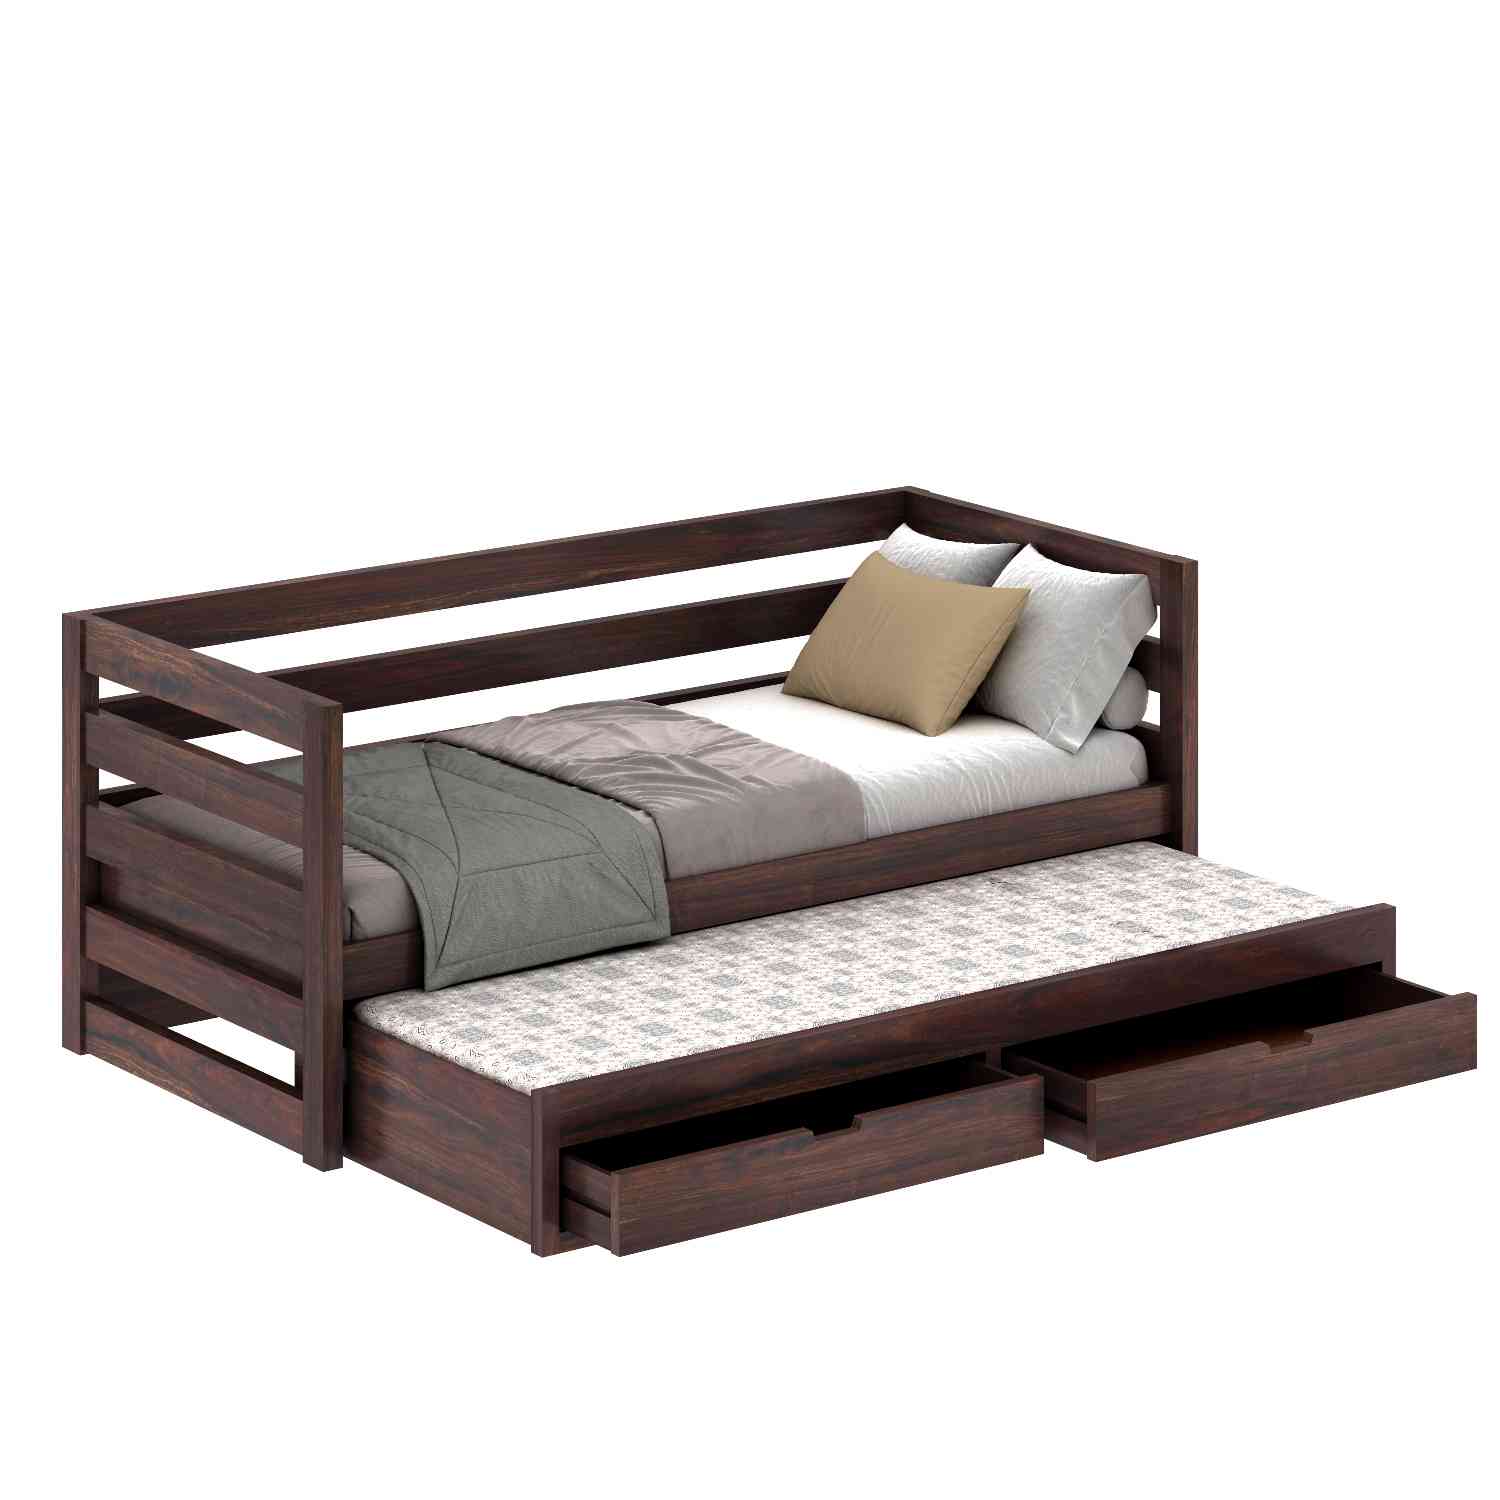 Feelinn Solid Sheesham Wood Trundle Bed For Kids (Without Mattress, Walnut Finish)